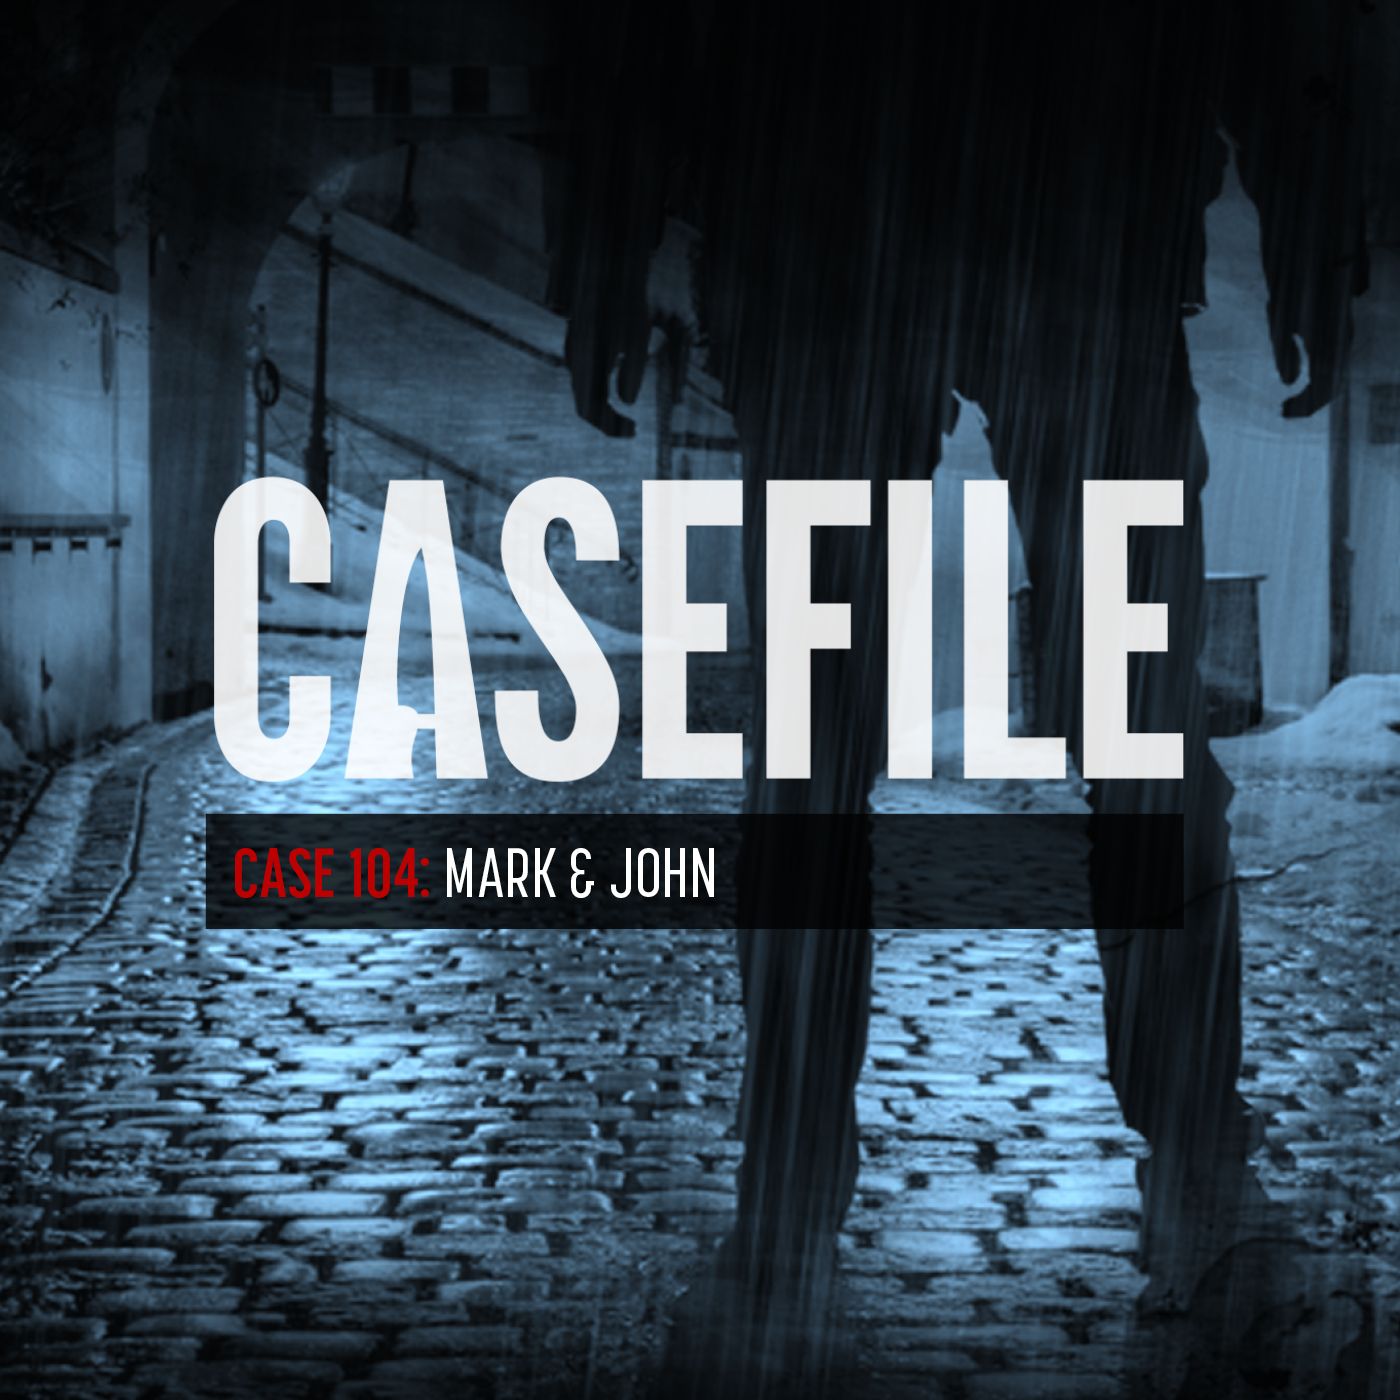 Case 104: Mark & John